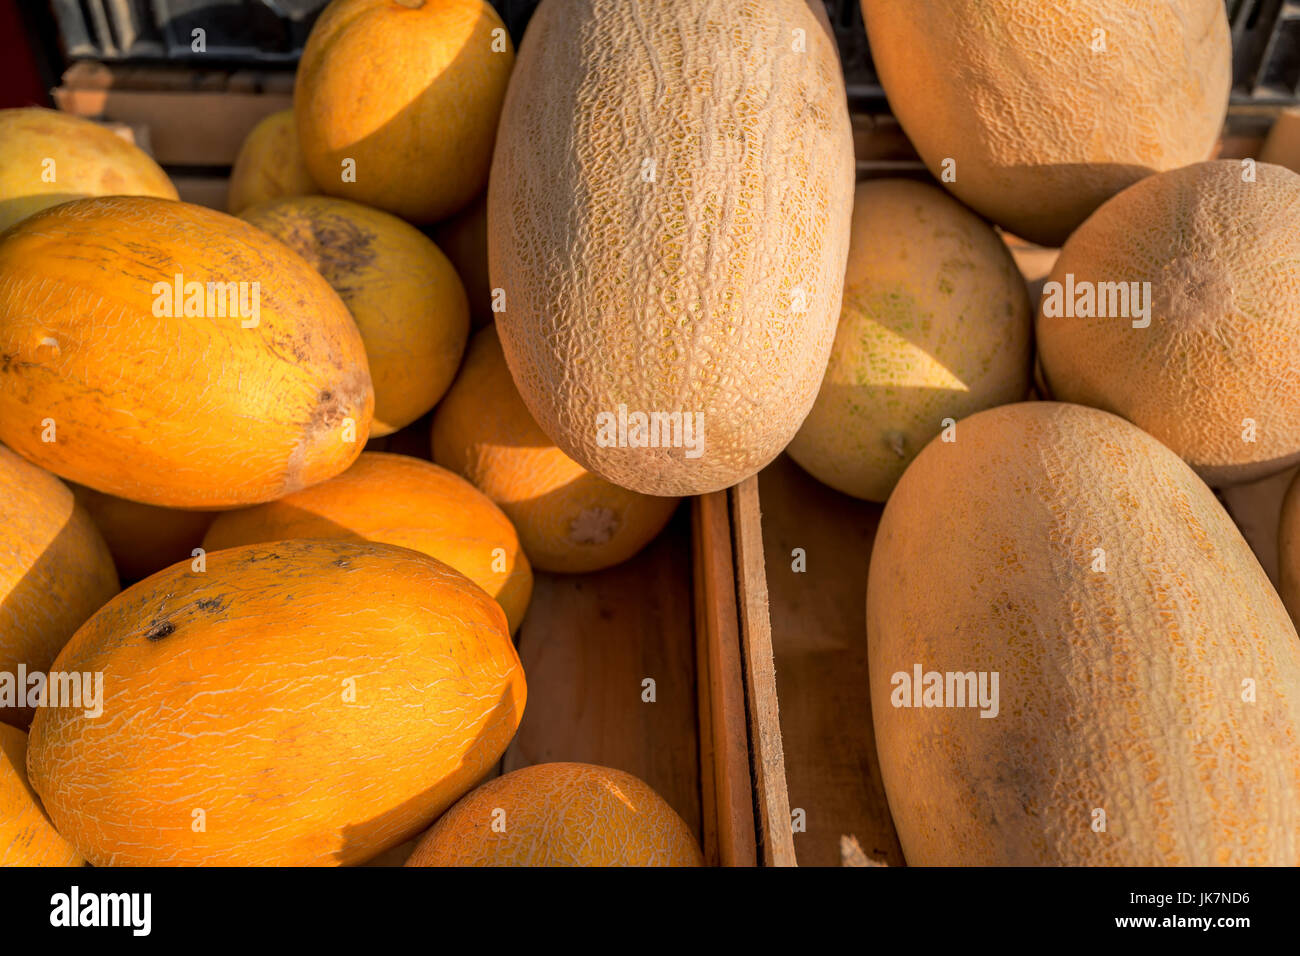 Ripe yellow melons Stock Photo